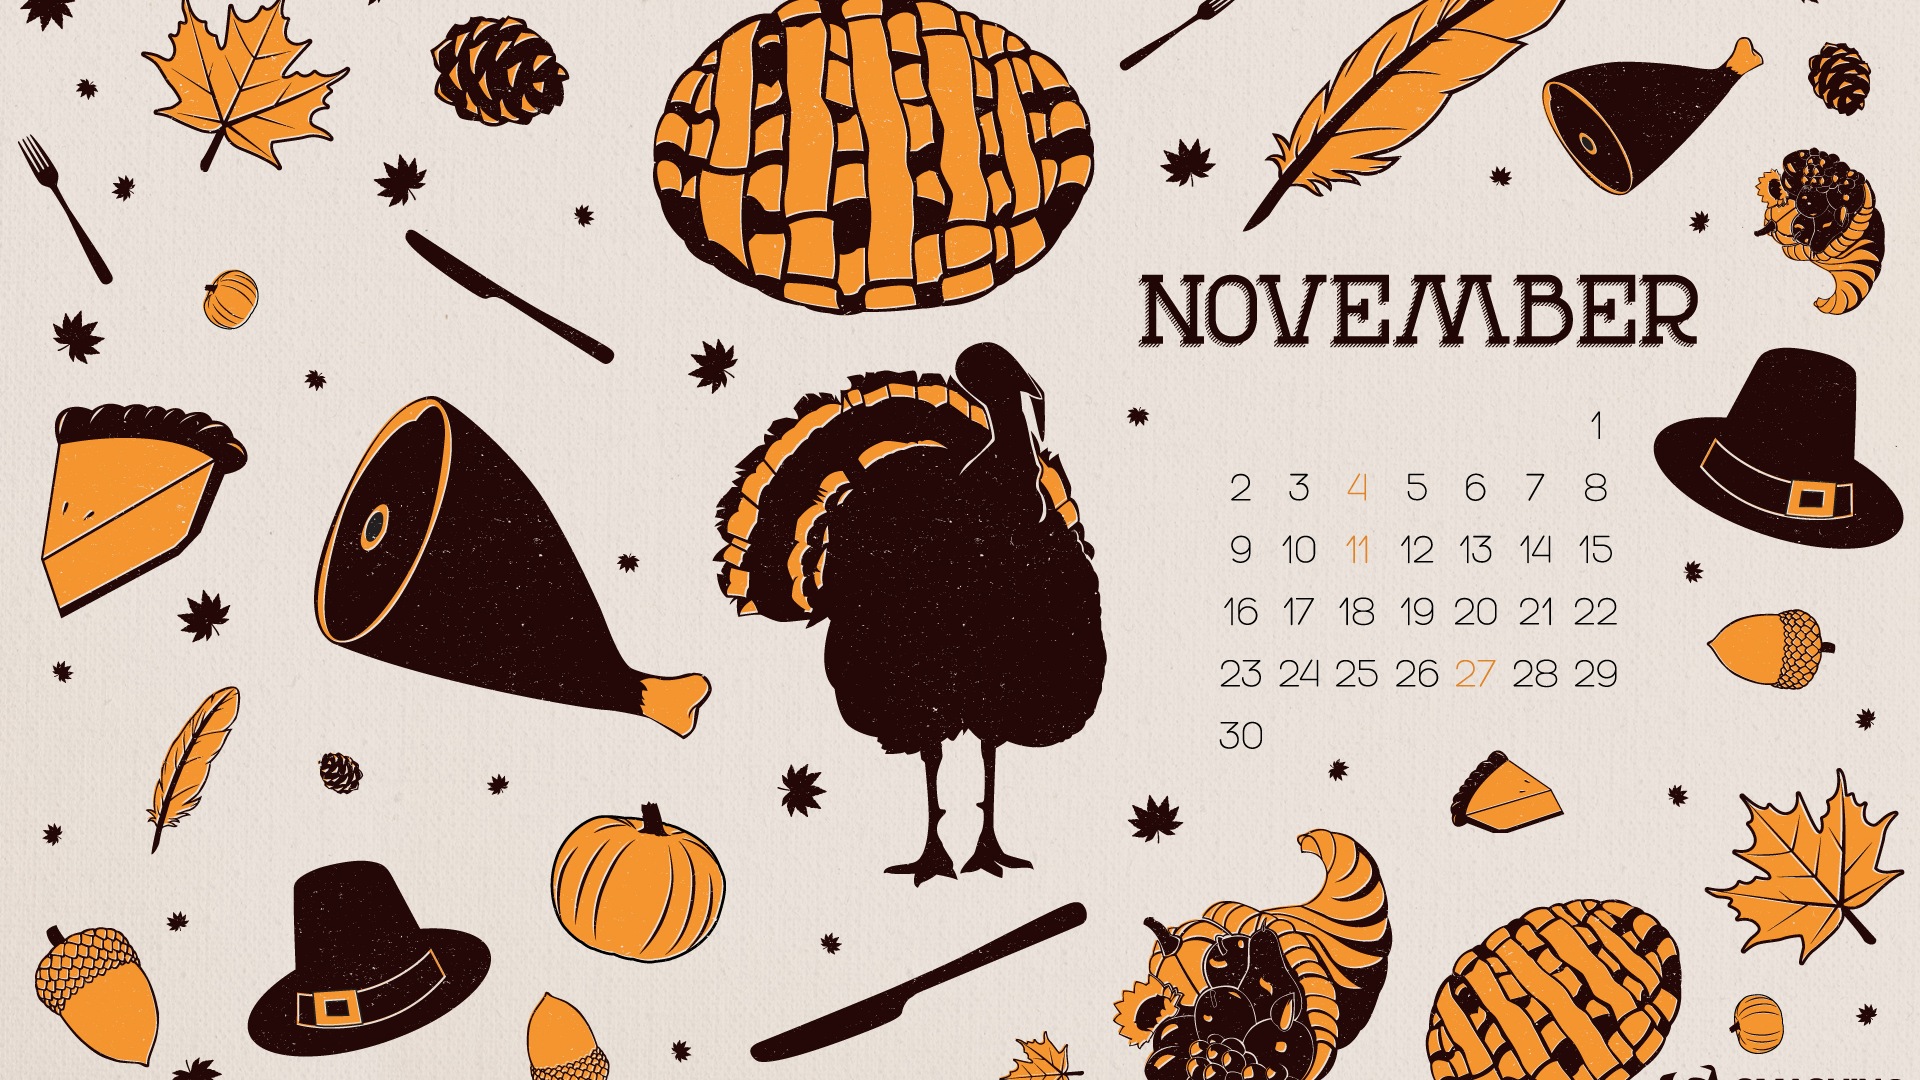 November 2014 Calendar wallpaper(2) #14 - 1920x1080